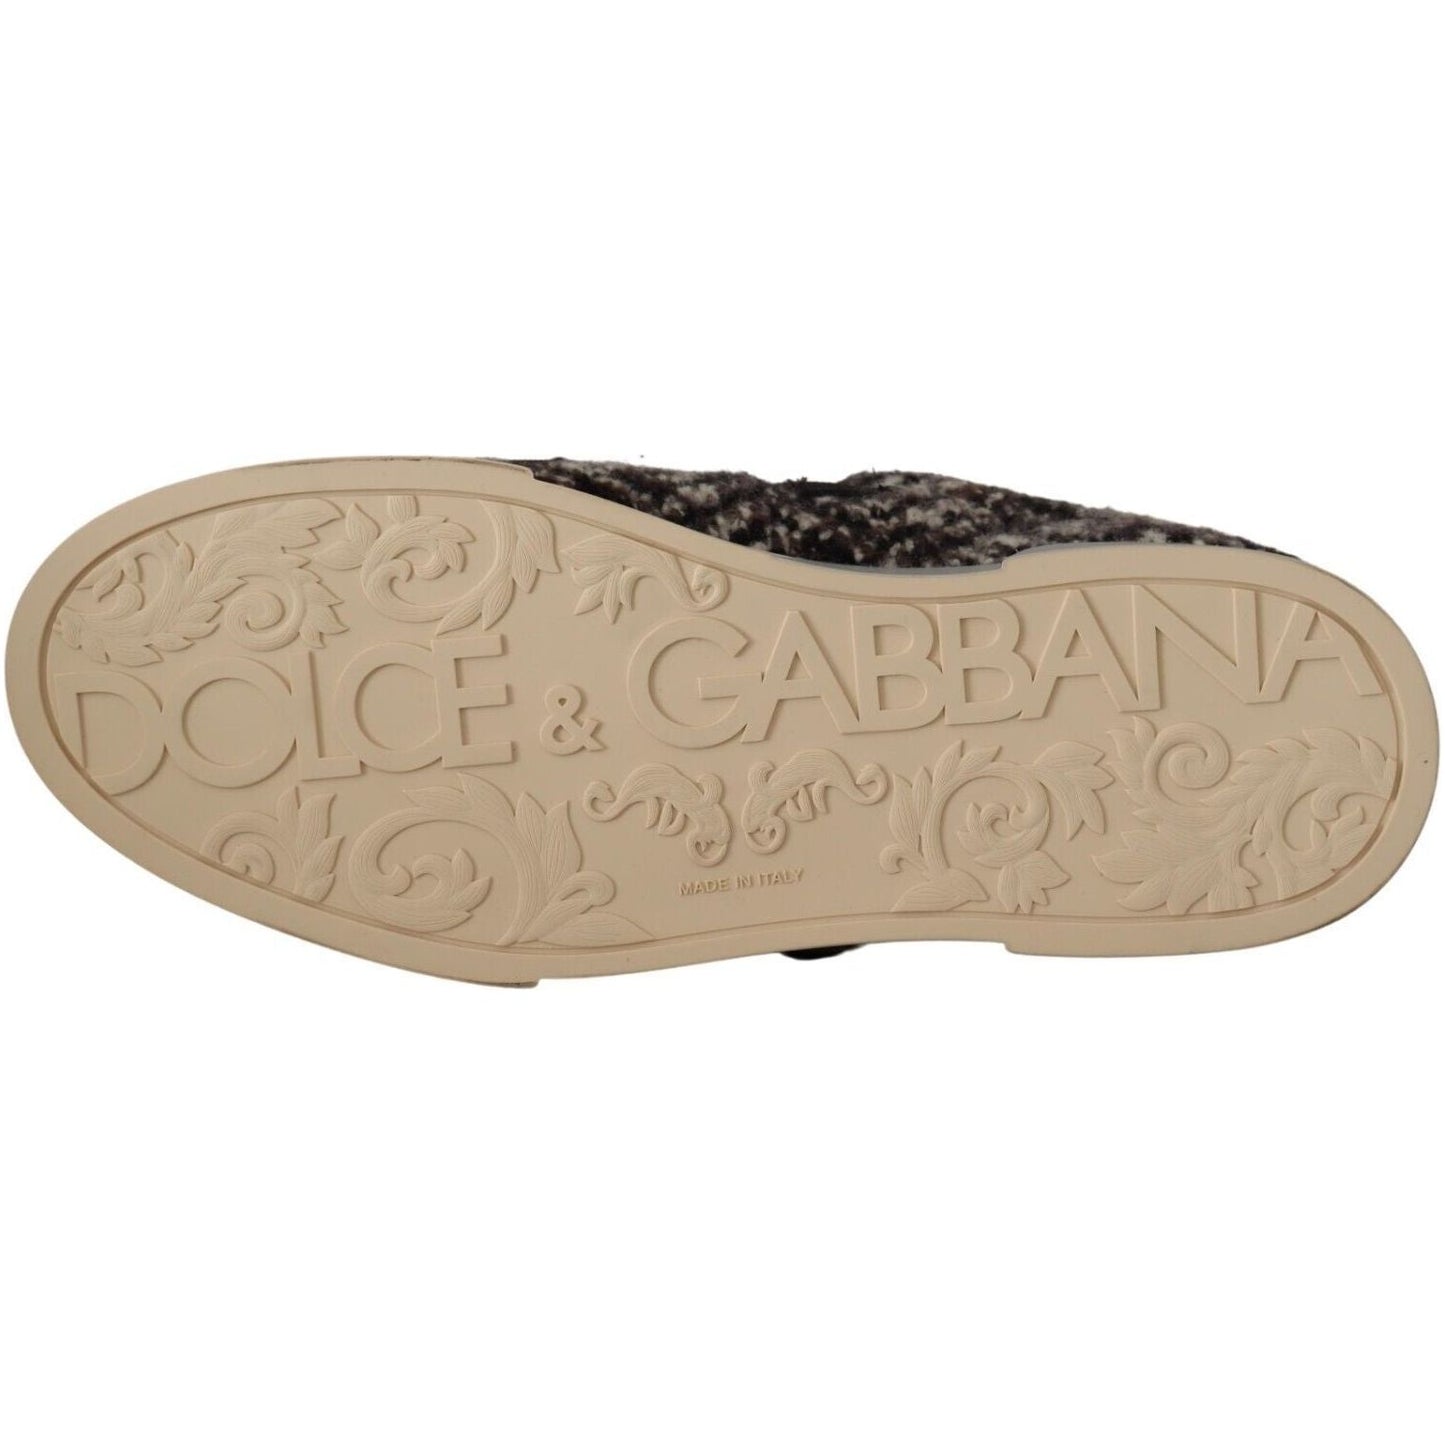 Dolce & Gabbana Silver Elegance Leather Sneakers silver-leather-brown-cotton-wool-sneakers-shoes s-l1600-3-62-e36905d6-7d3.jpg